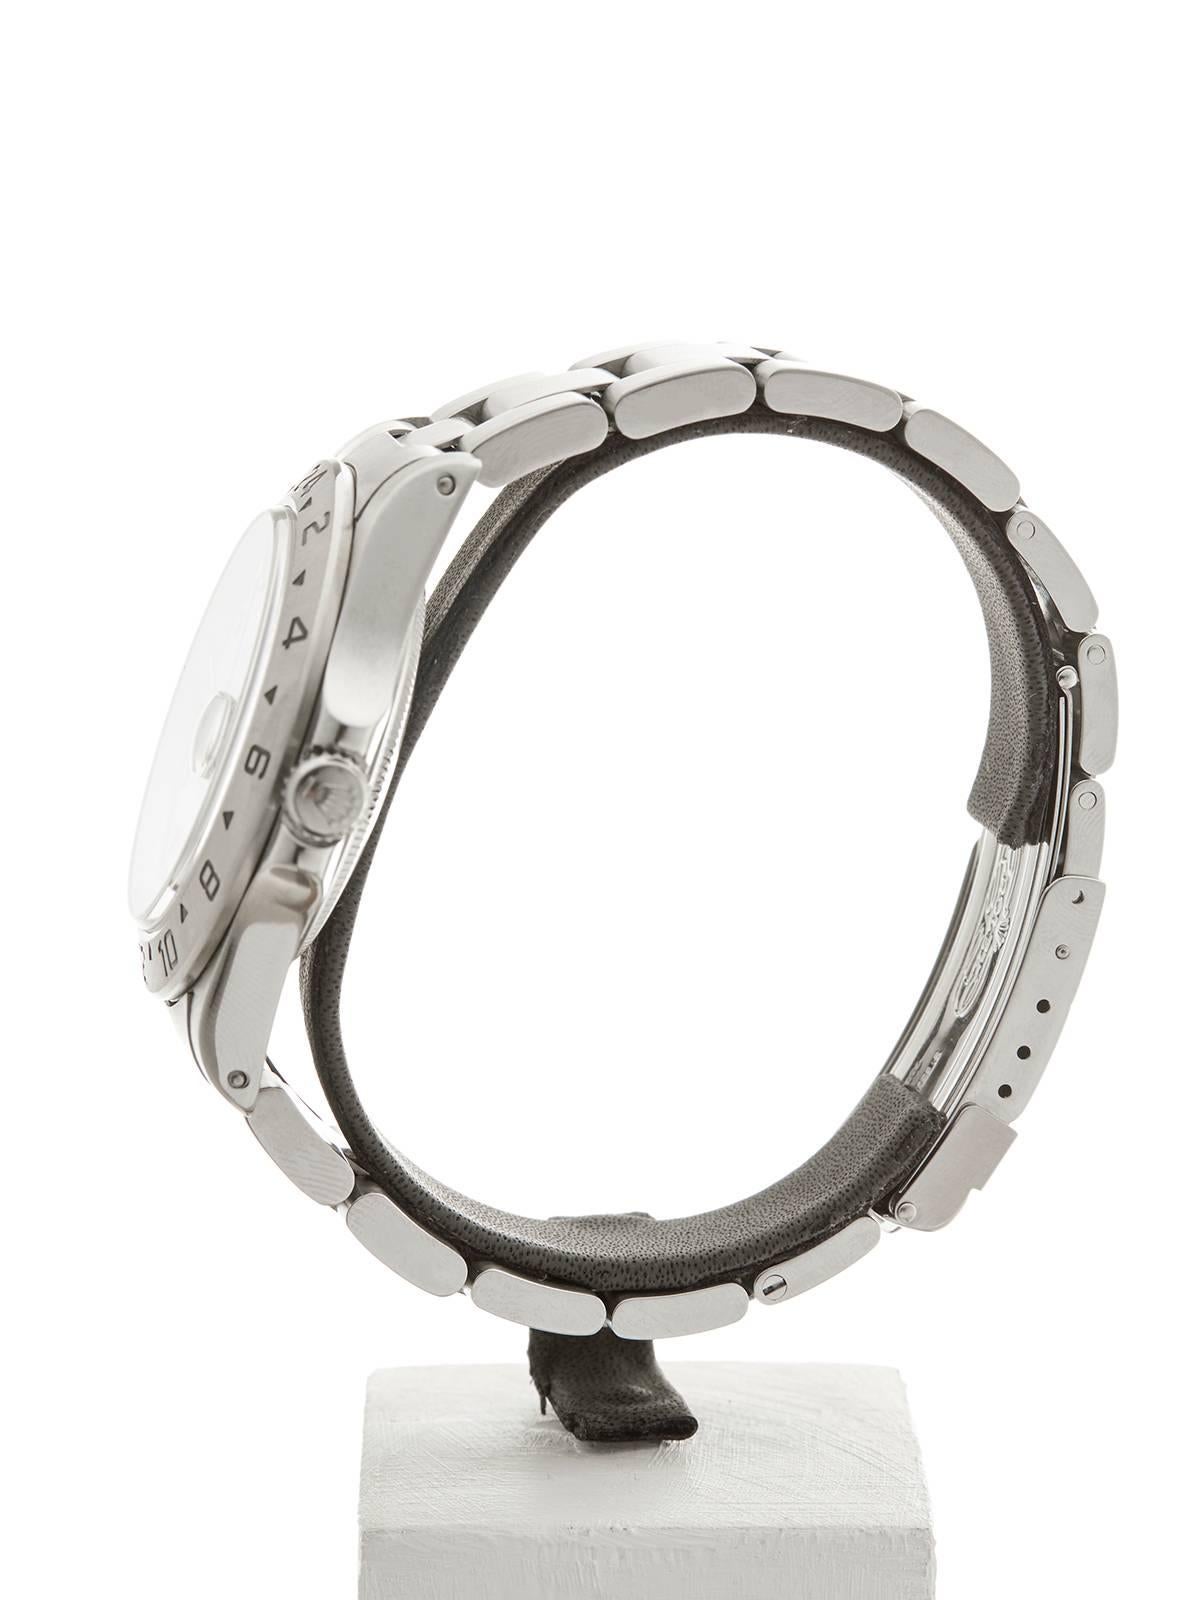 Rolex Stainless Steel Explorer II Polar Automatic Wristwatch 16570 1